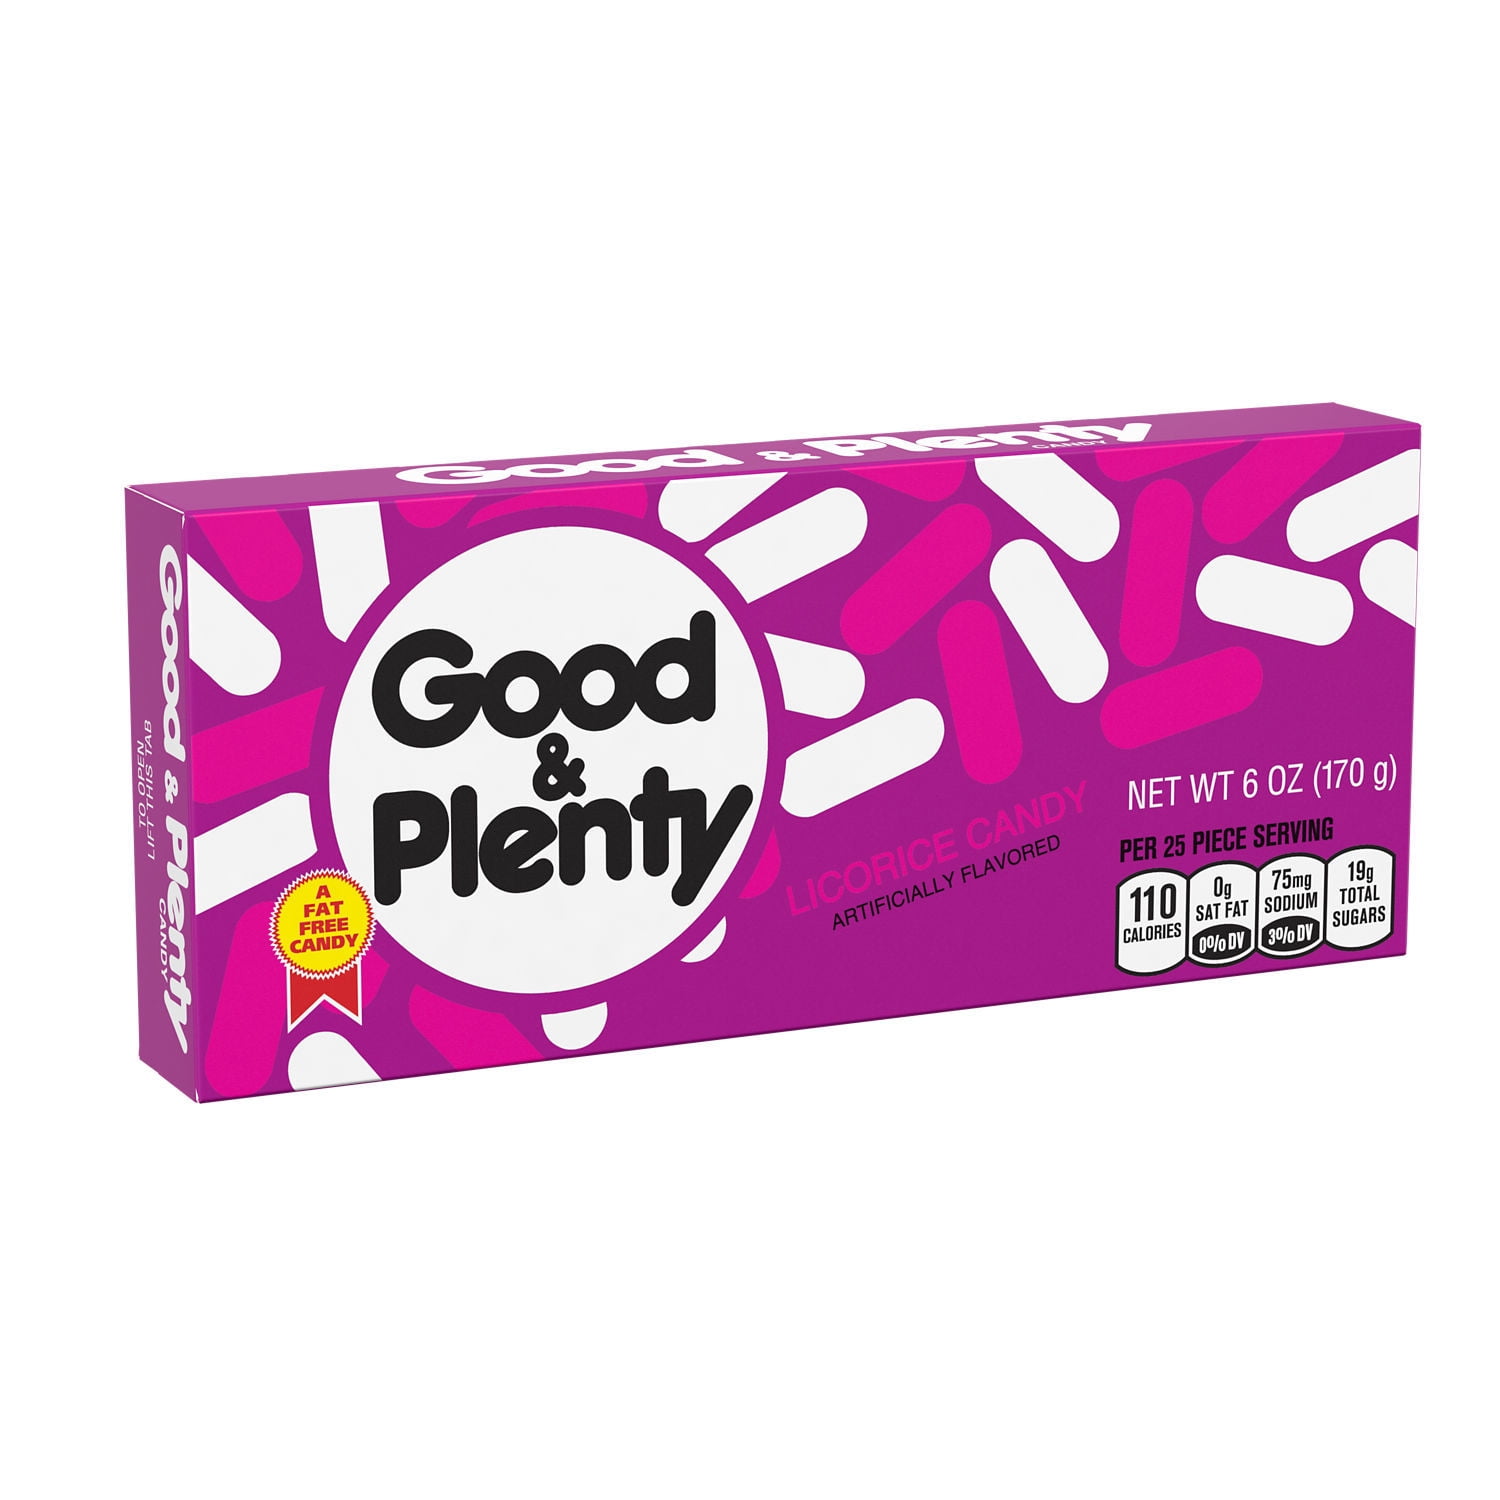 GOOD & PLENTY Licorice Fat Free, Movie Candy Candy Box, 6 oz